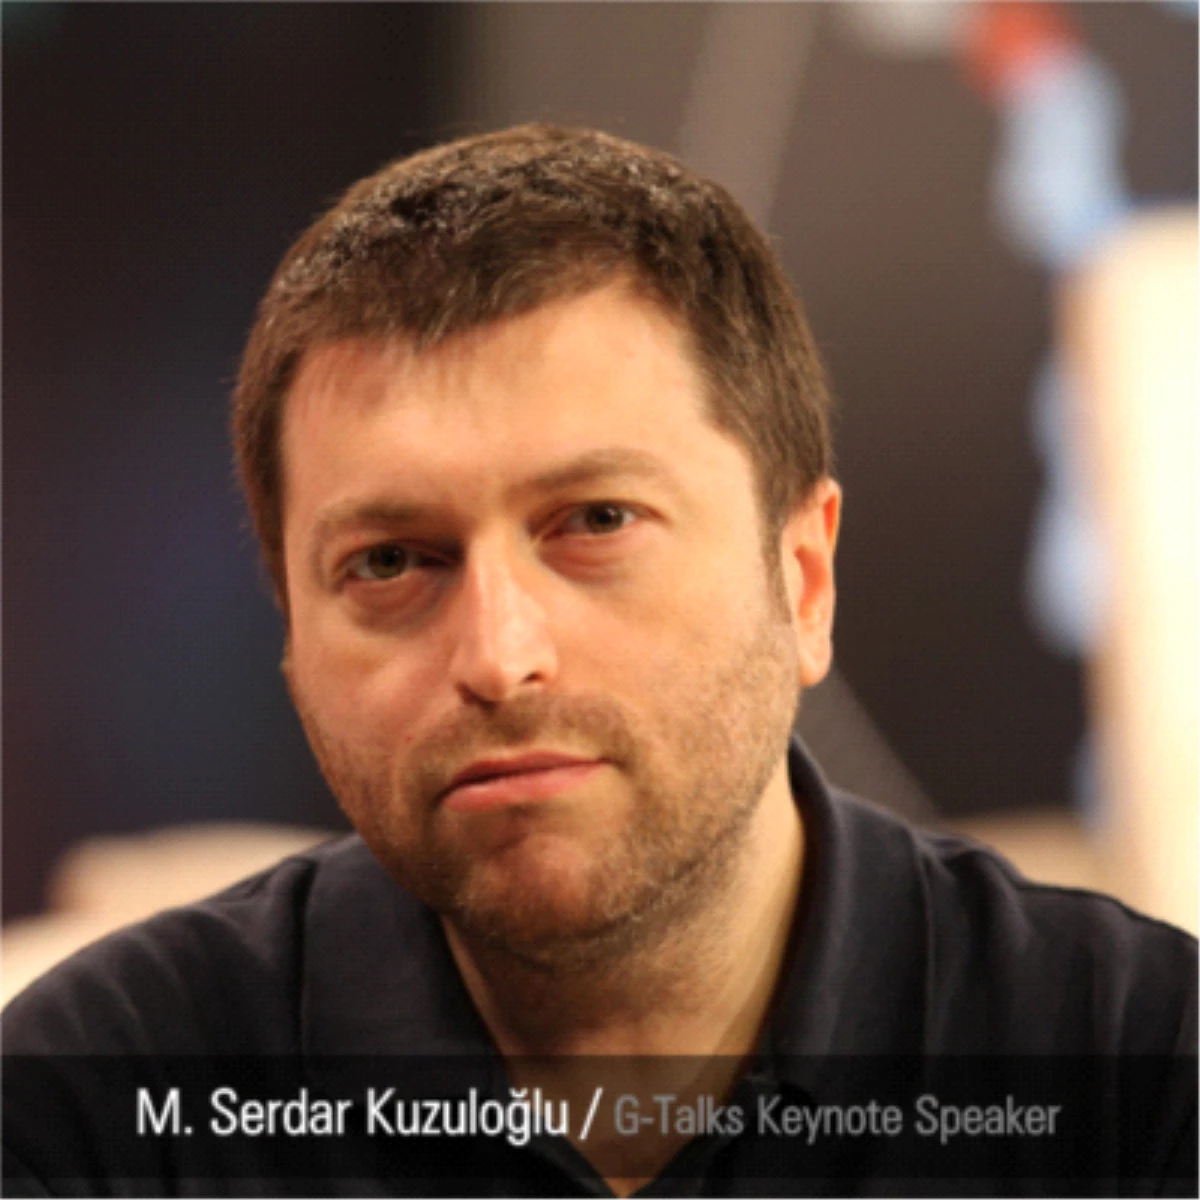 M. Serdar Kuzuloğlu G-Talks Keynote Speaker